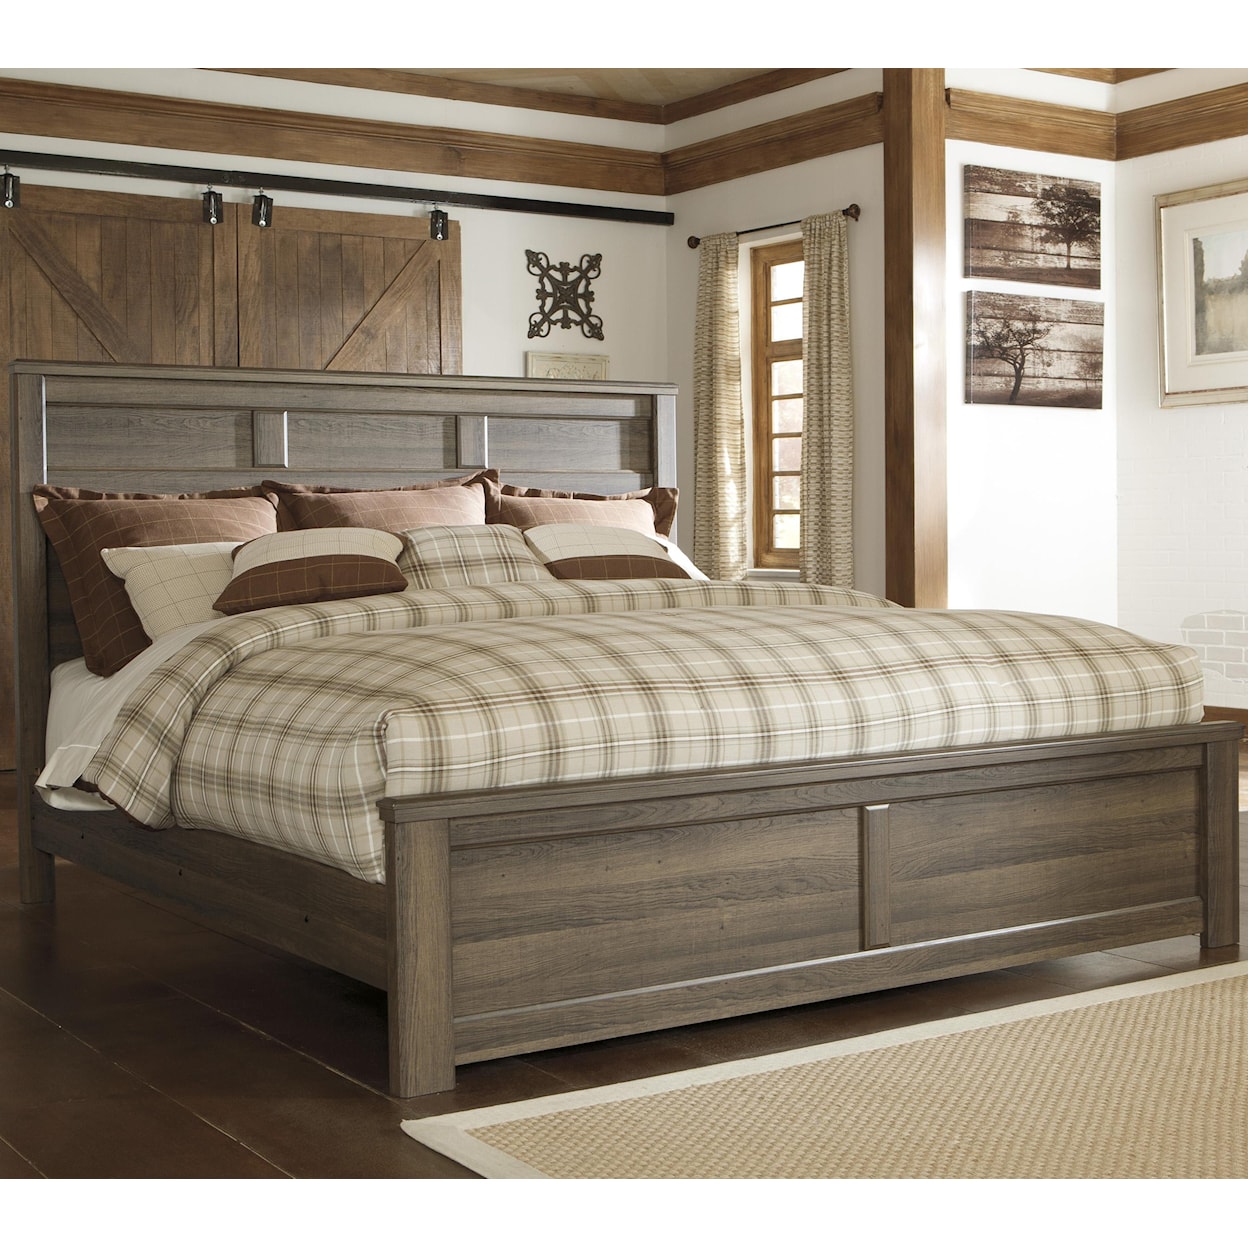 Ashley Furniture Signature Design Juararo California King Panel Bed